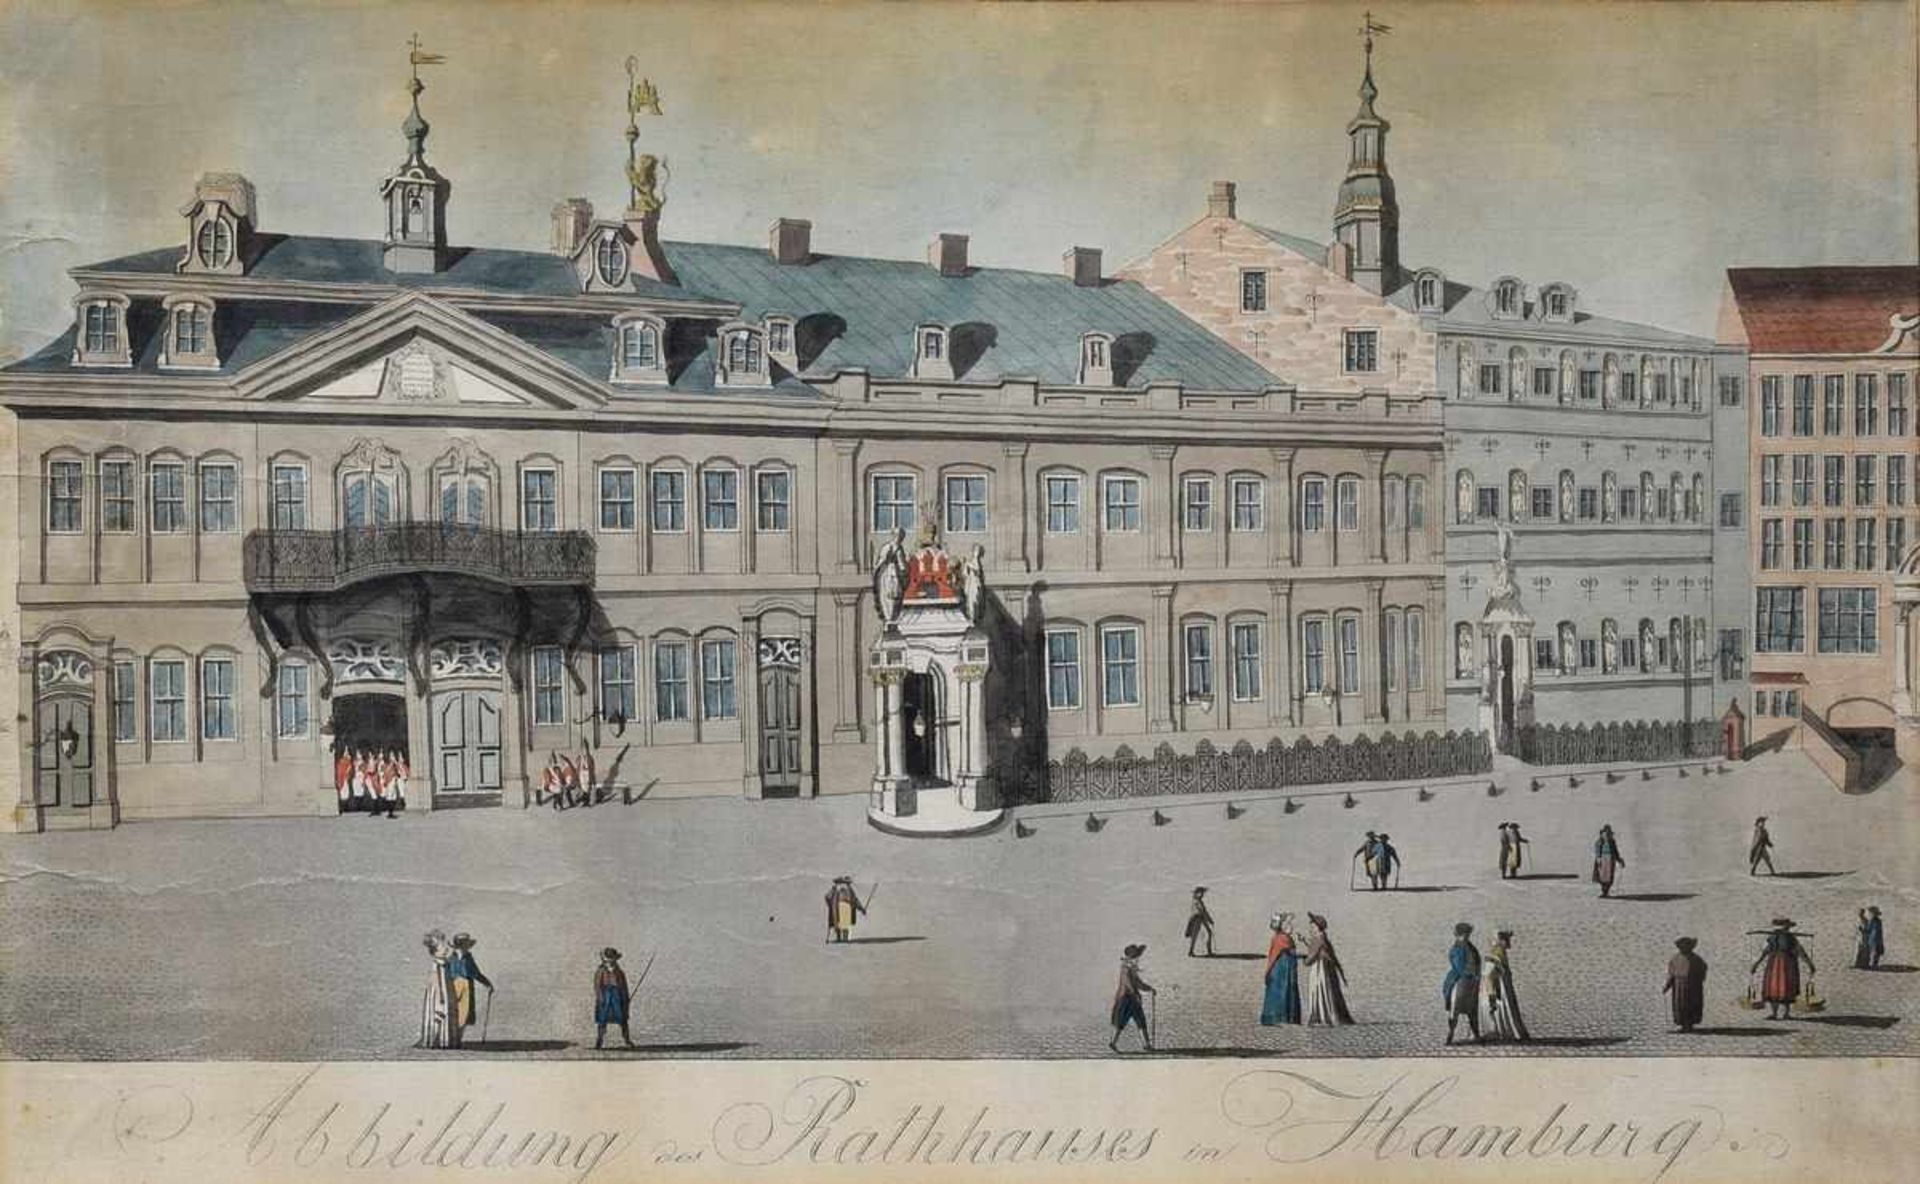 Hamburgensie "Abbildung des Rathauses in Hamburg", colorierte Aquatinta-Radierung, um 1800,